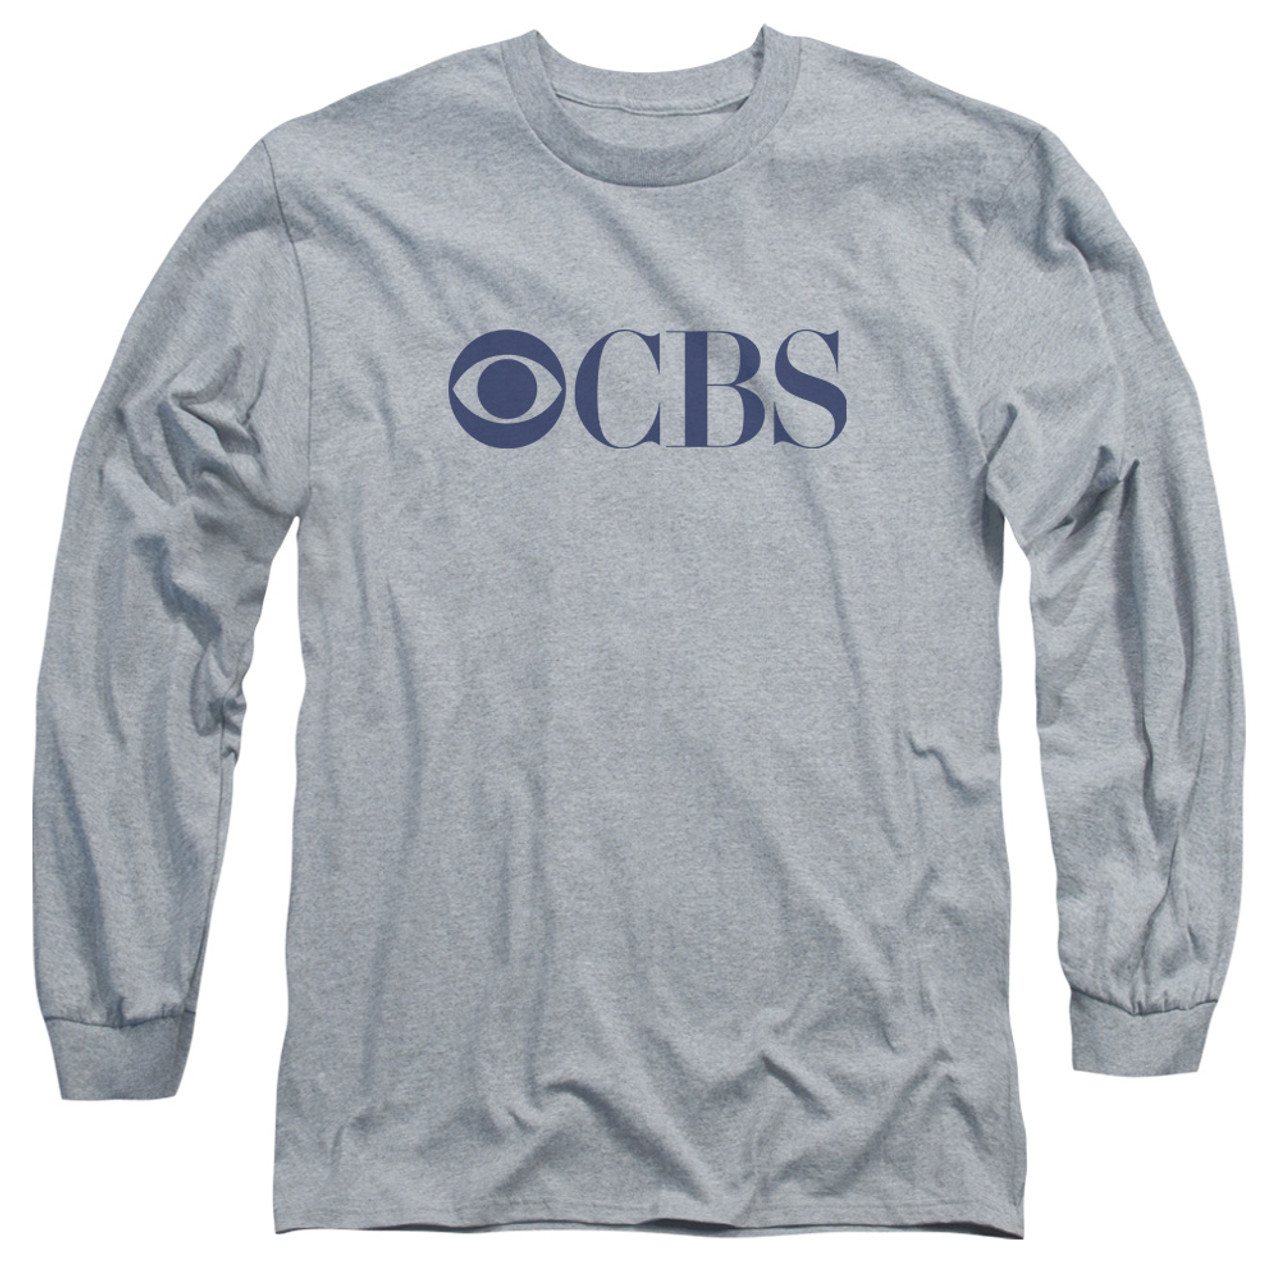 cbs network logo